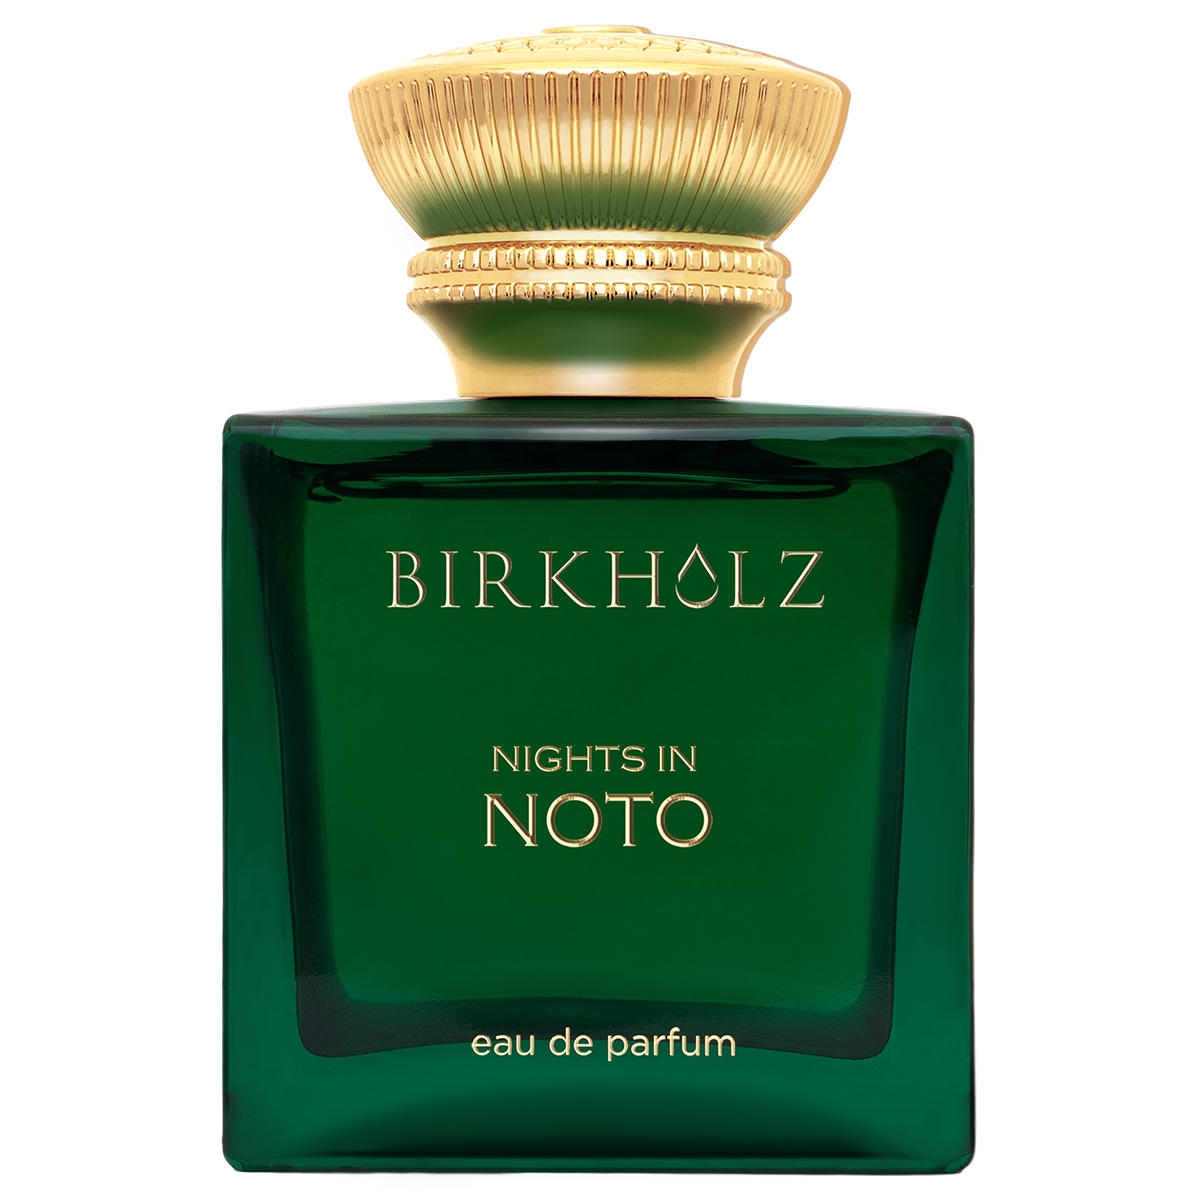 birkholz nights in noto eau de parfum 100 ml